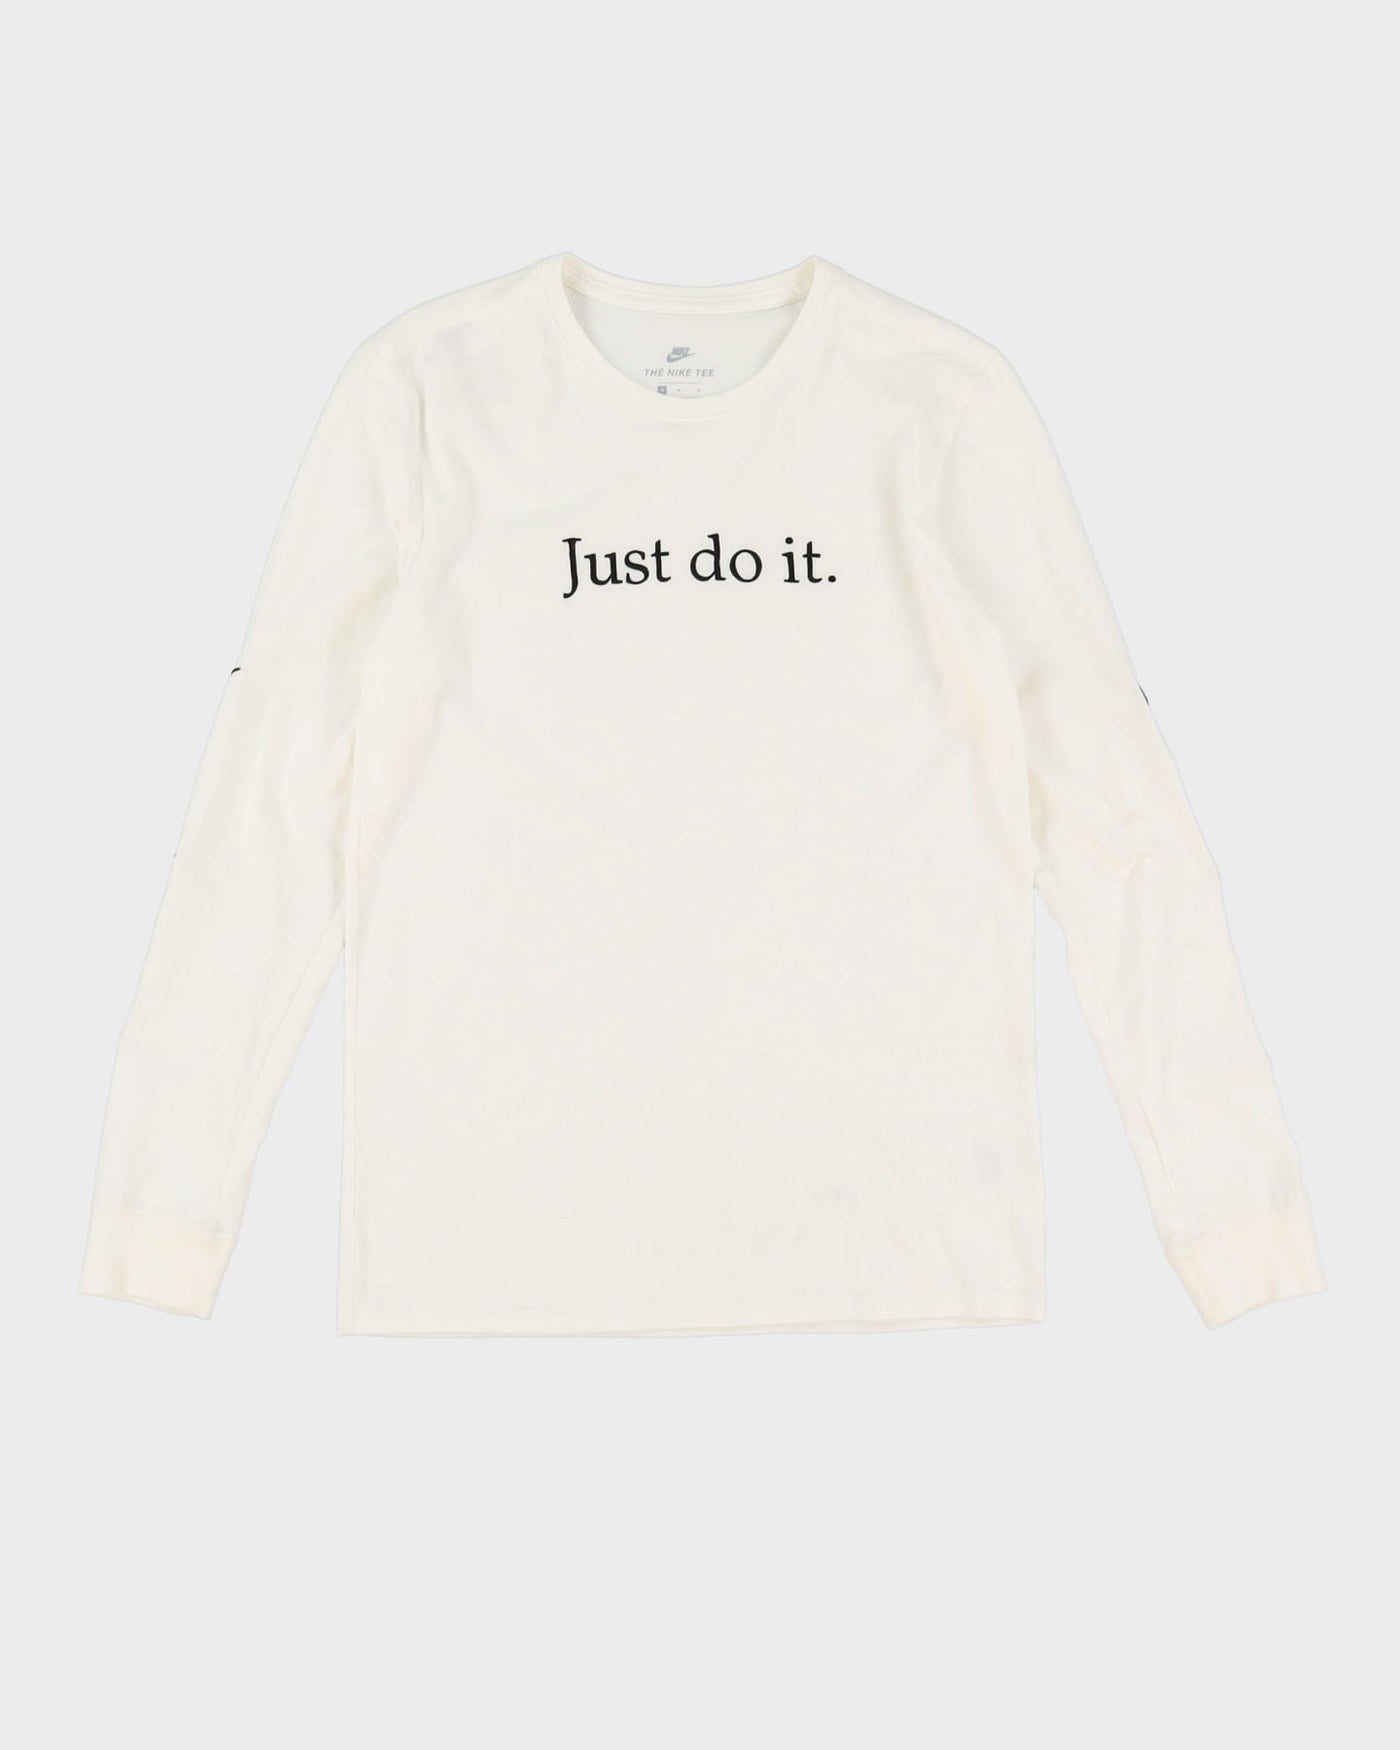 Nike 'Just Do It' White Long Sleeve T-Shirt - M